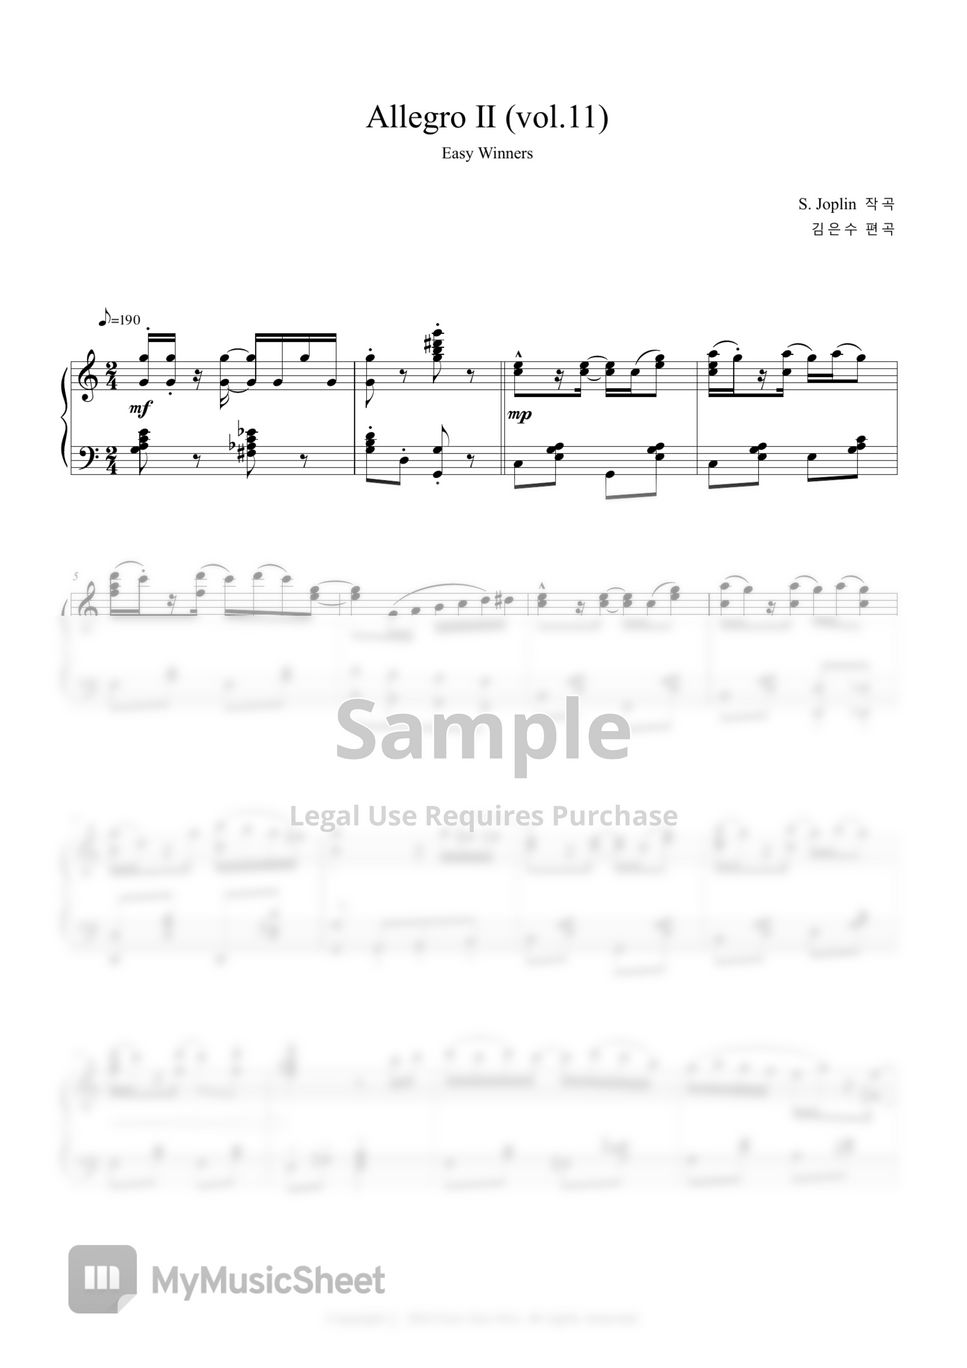 S. Joplin - Allegro Ⅱ (vol.11) by Eun Soo Kim